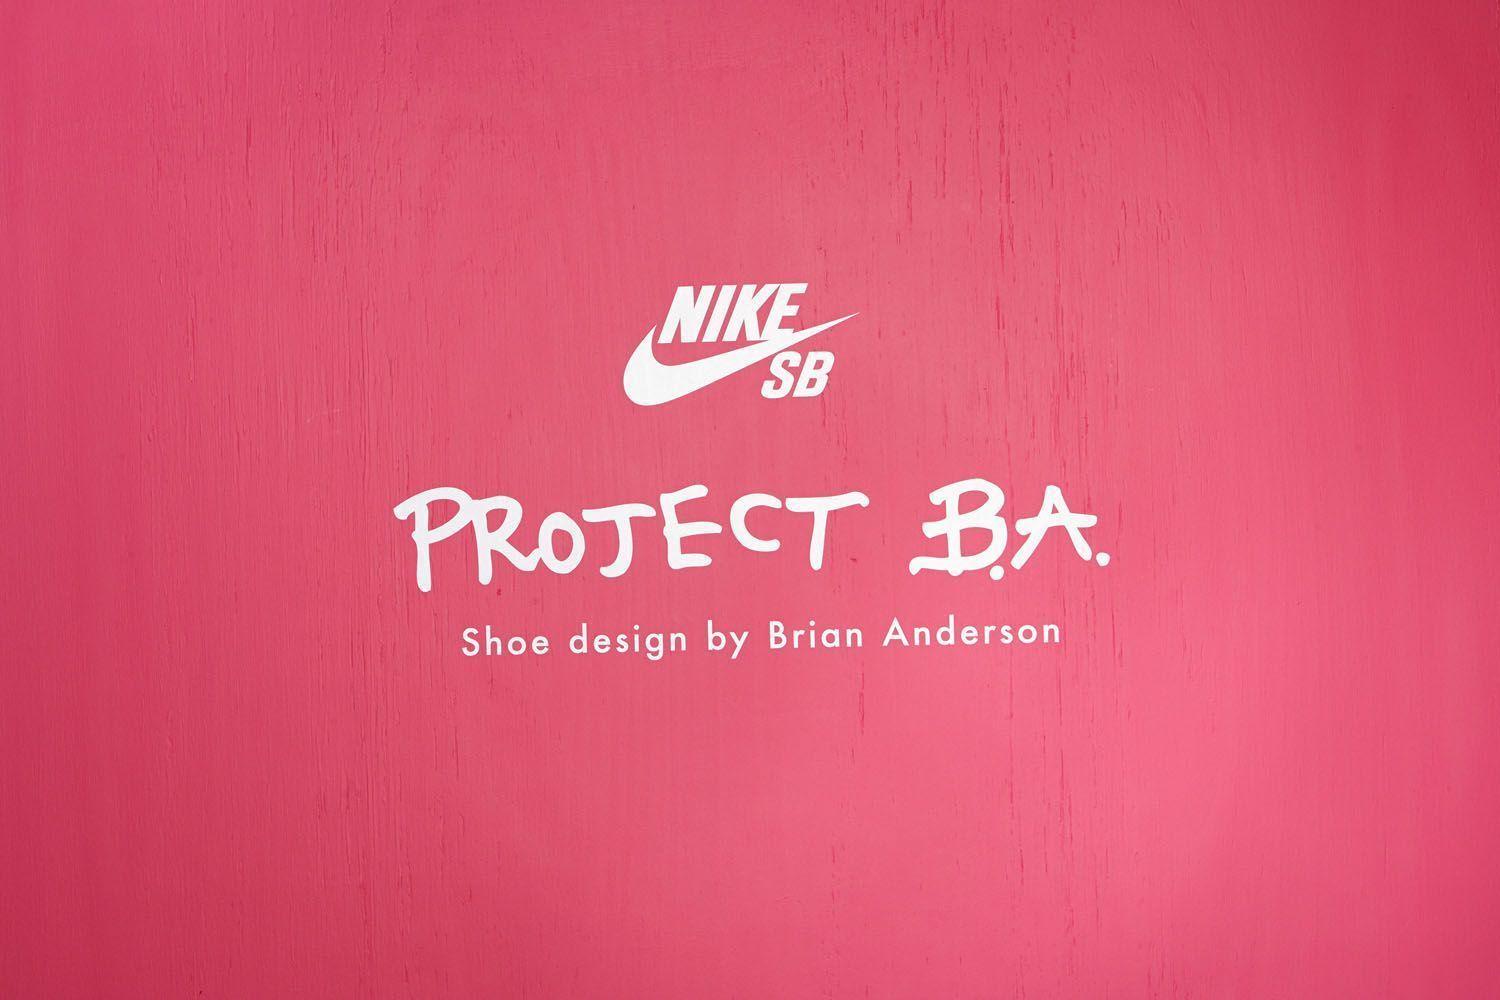 Nike SB Project: BA London